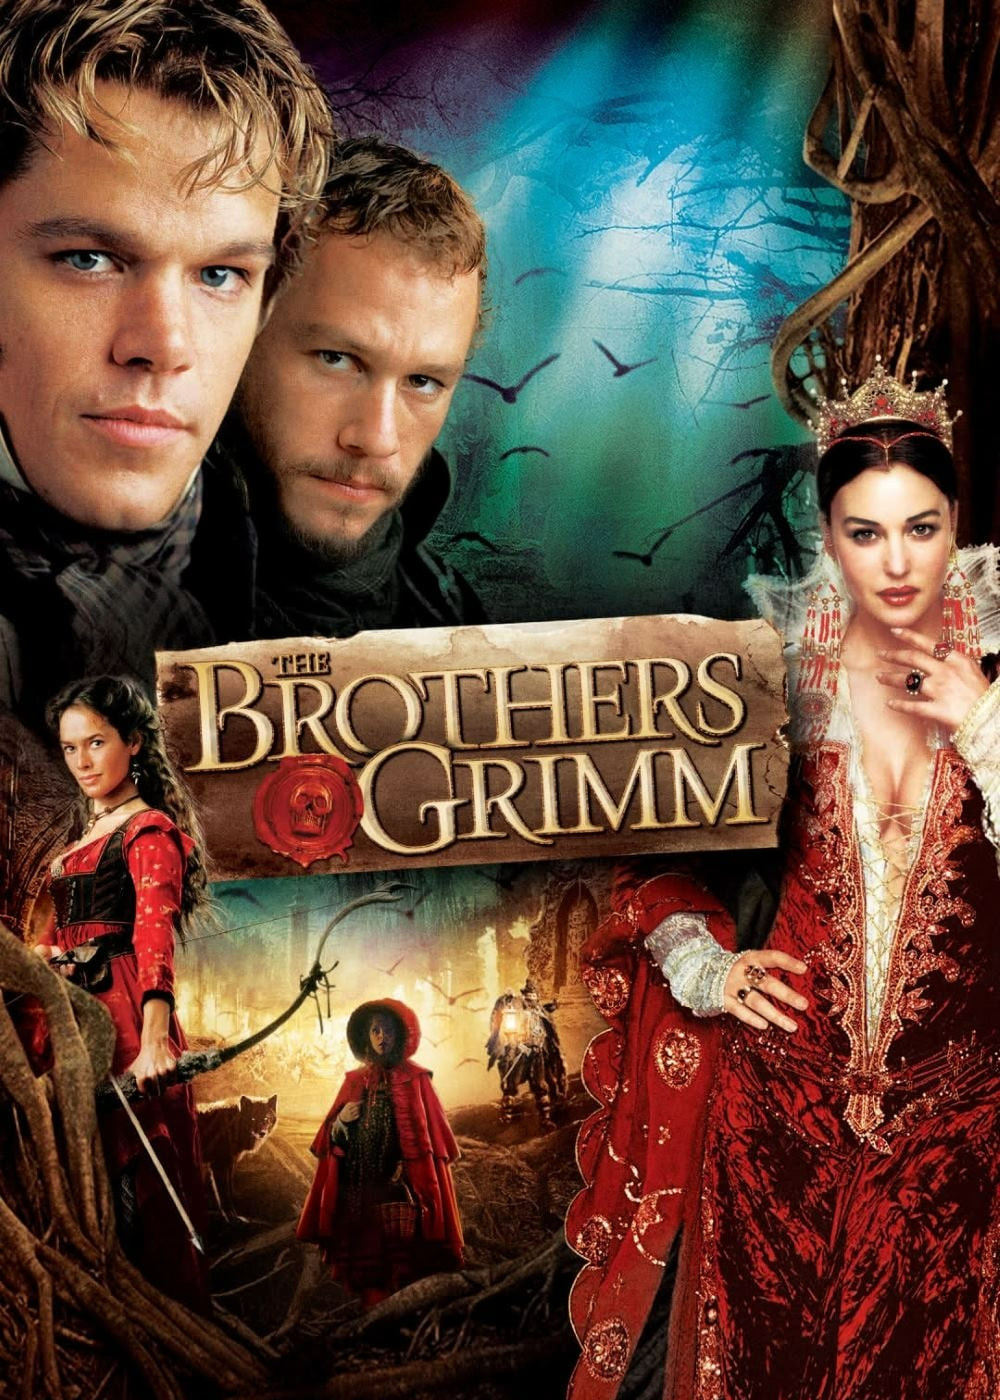 Xem Phim Anh Em Nhà Grimm (The Brothers Grimm)